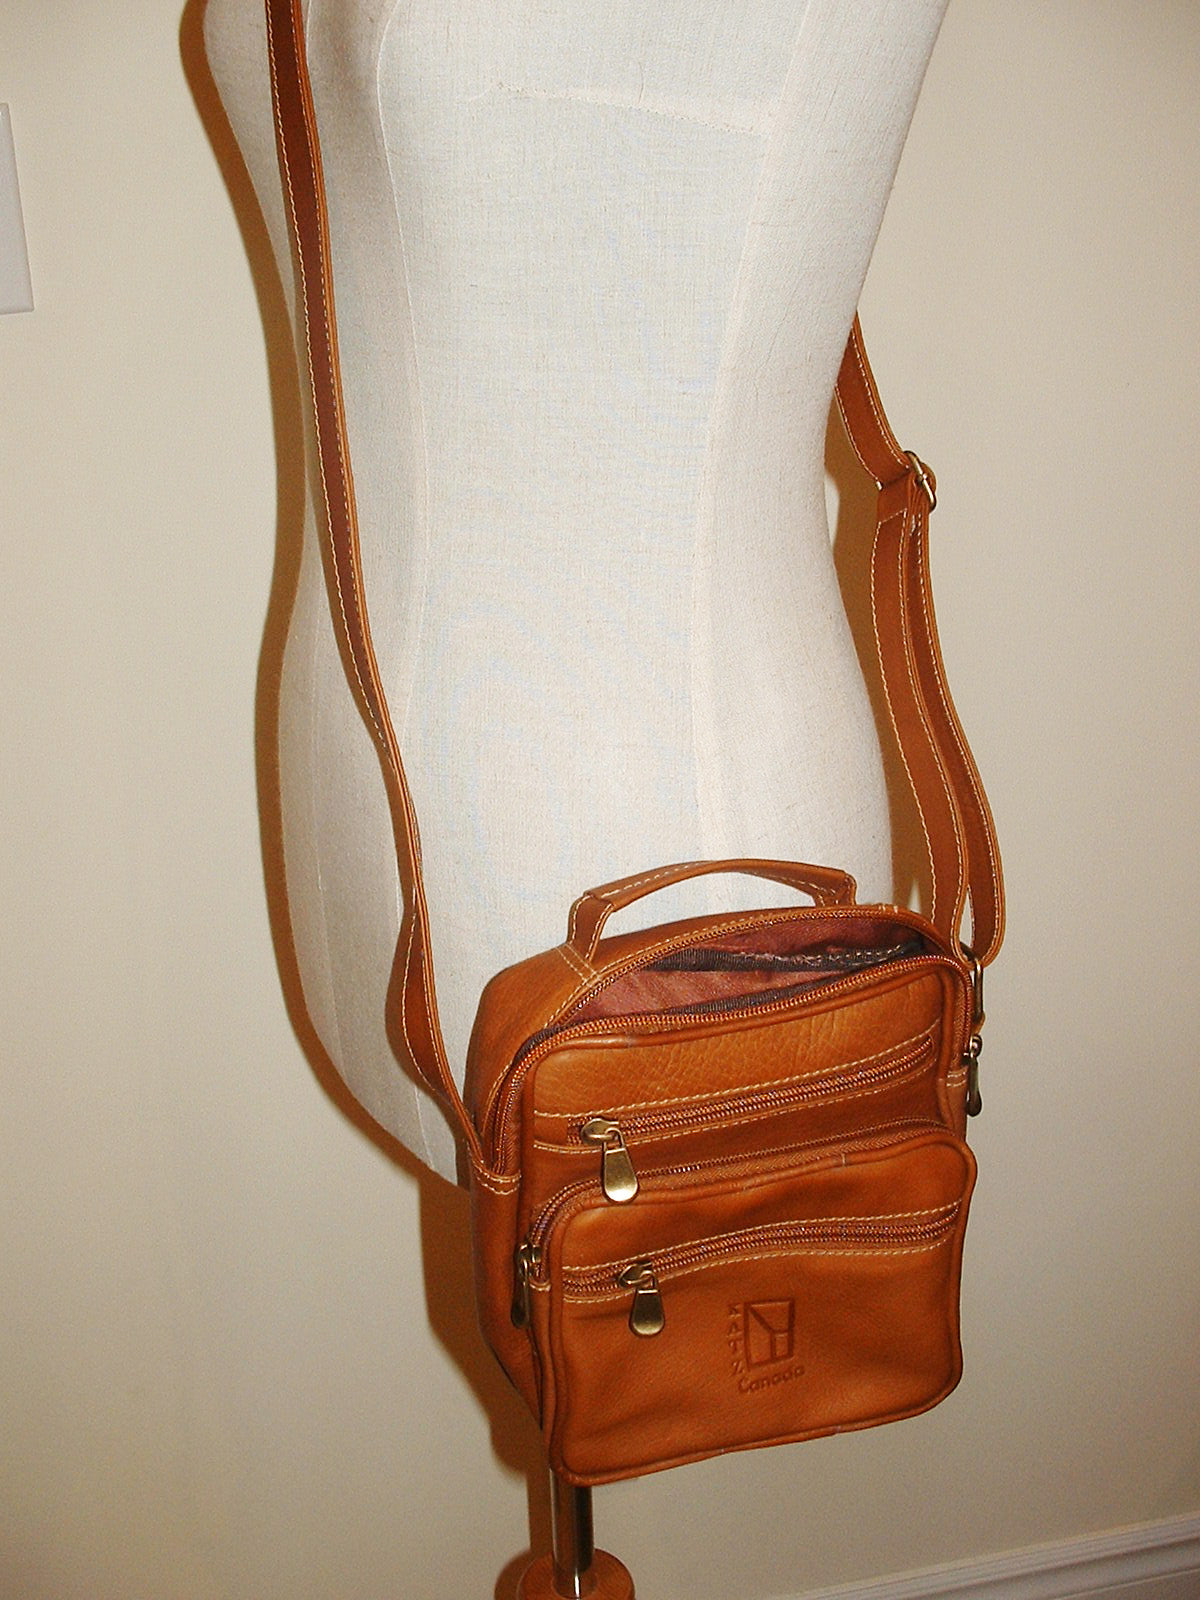 Handmade Leather Messenger Bag